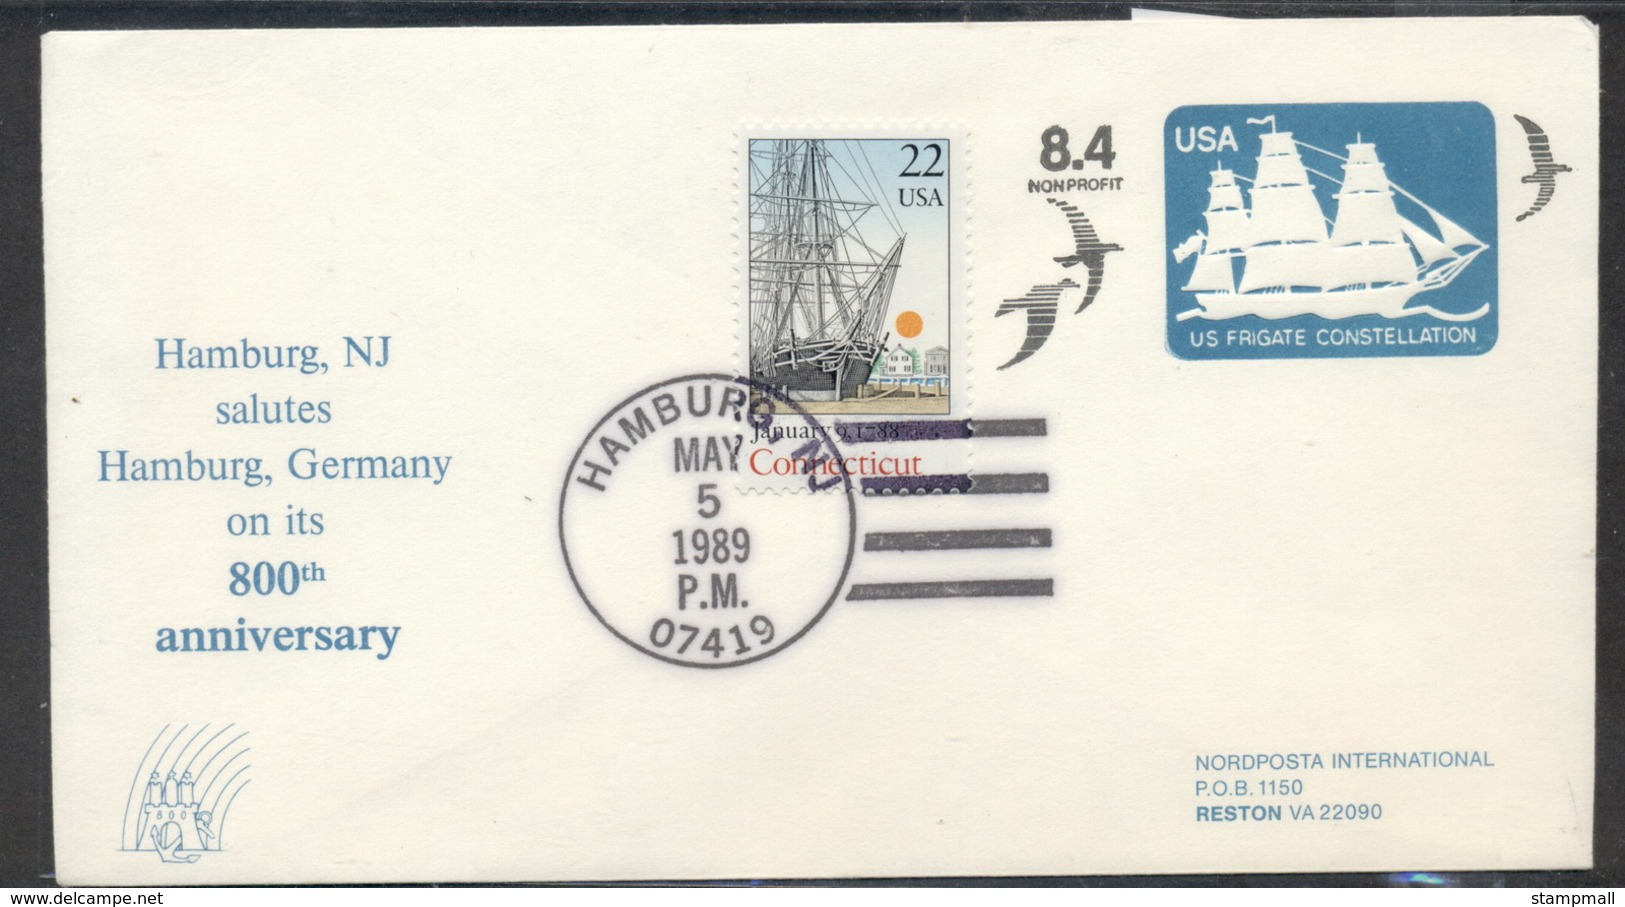 USA 1980 Frigate Constellation PSE, Hamburg Souvenir Cover - Event Covers